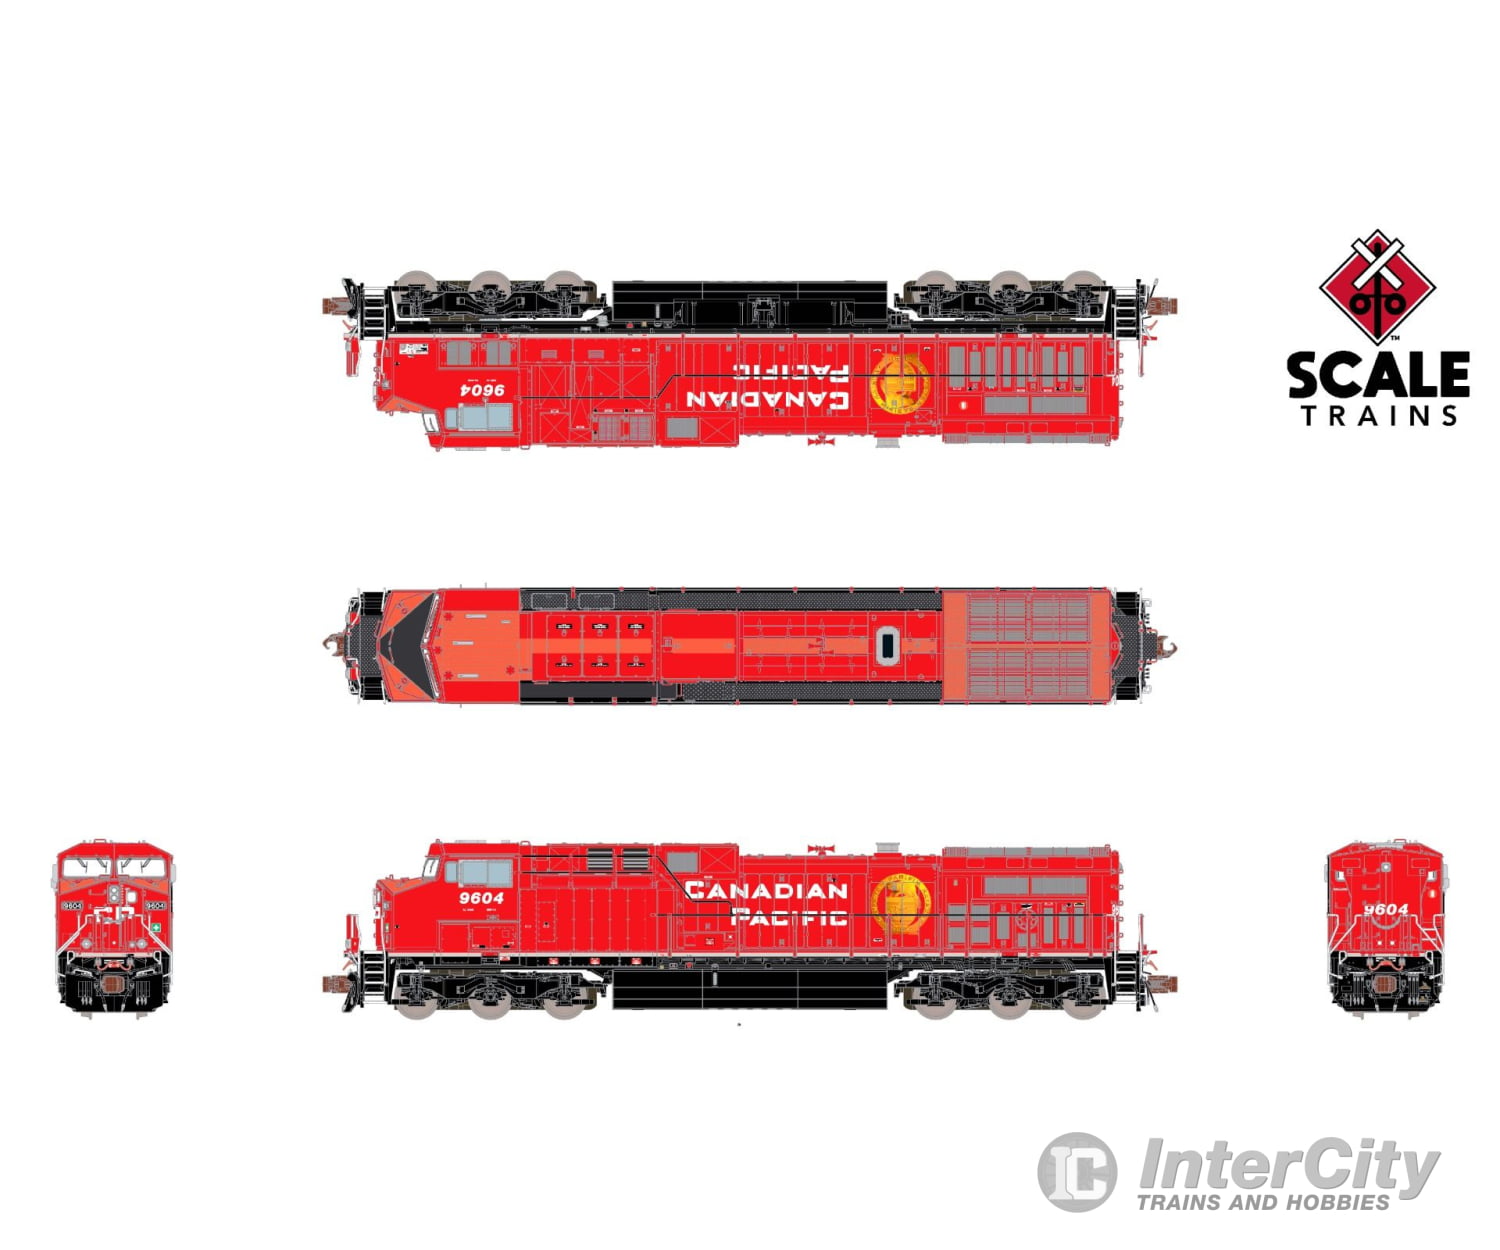 Scale Trains Sxt39097 Rivet Counter N Ge Ac4400Cw Canadian Pacific/Beaver #9658 Dcc & Sound